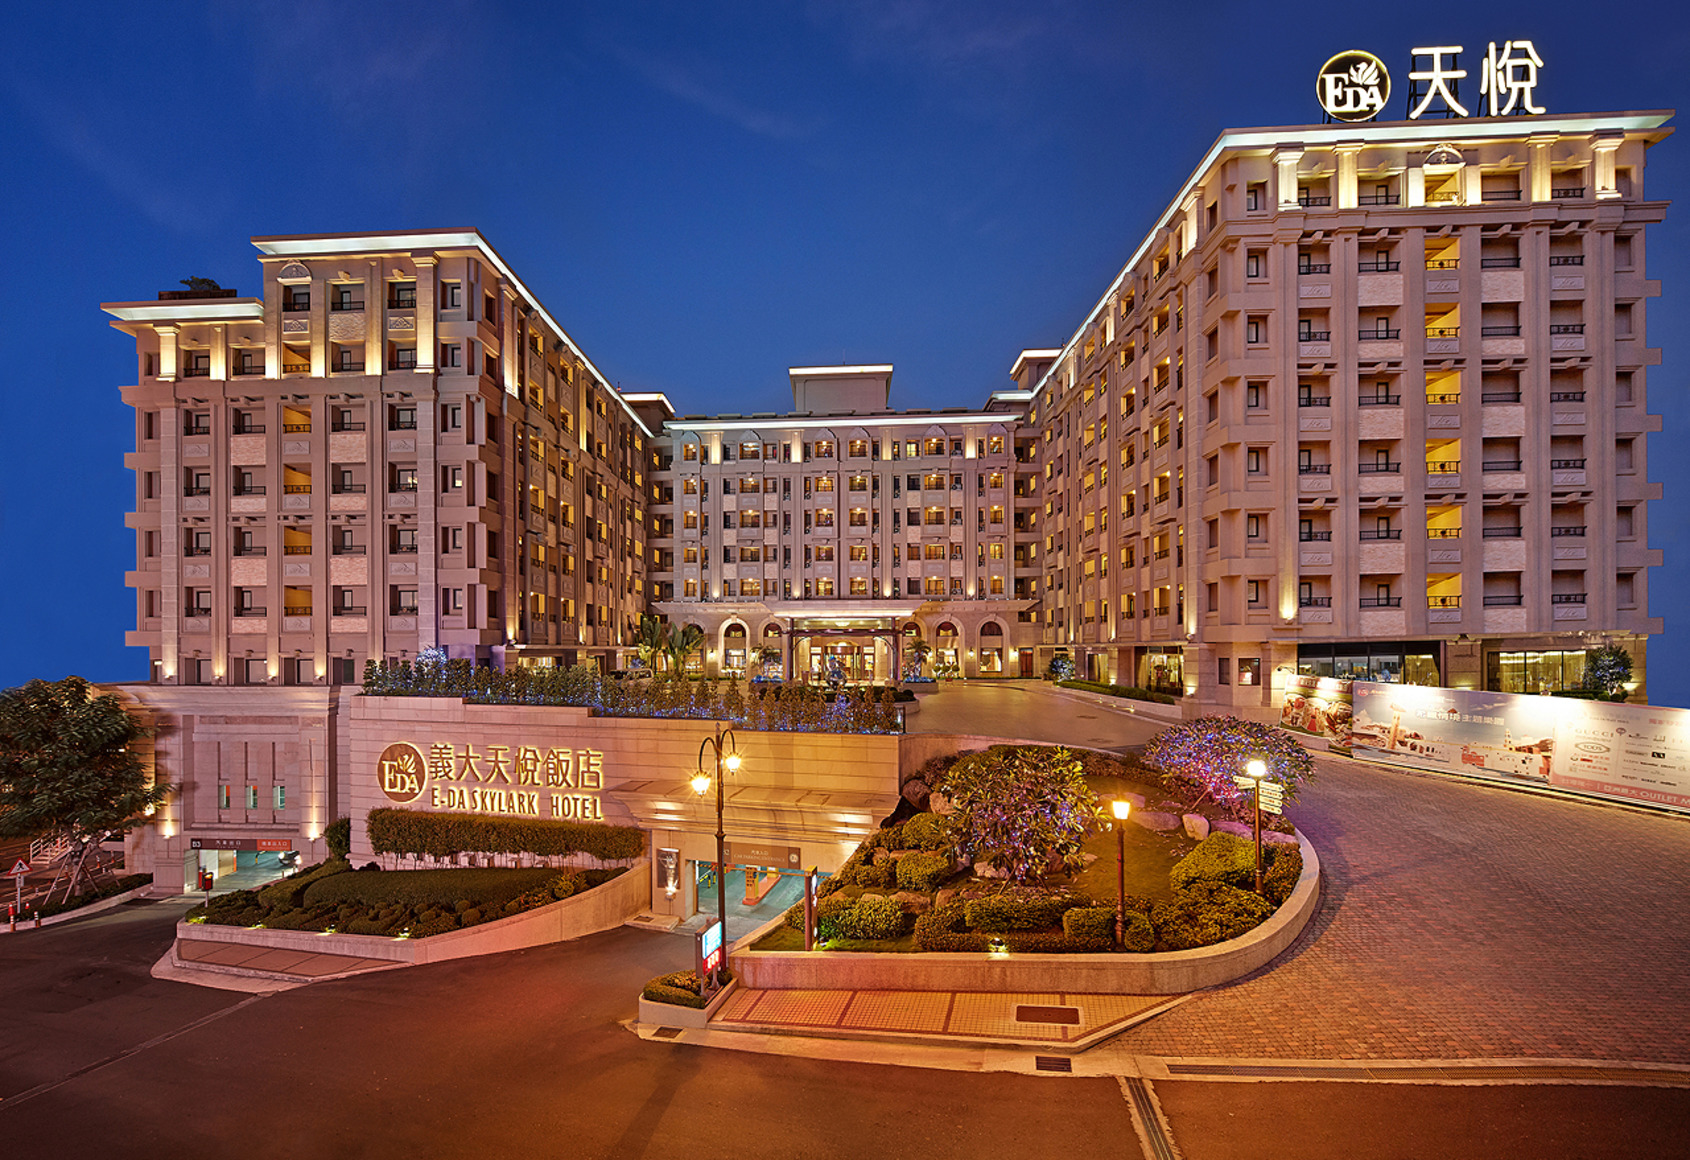 IHG Development China | 洲际酒店集团开发网站 | 关于我们